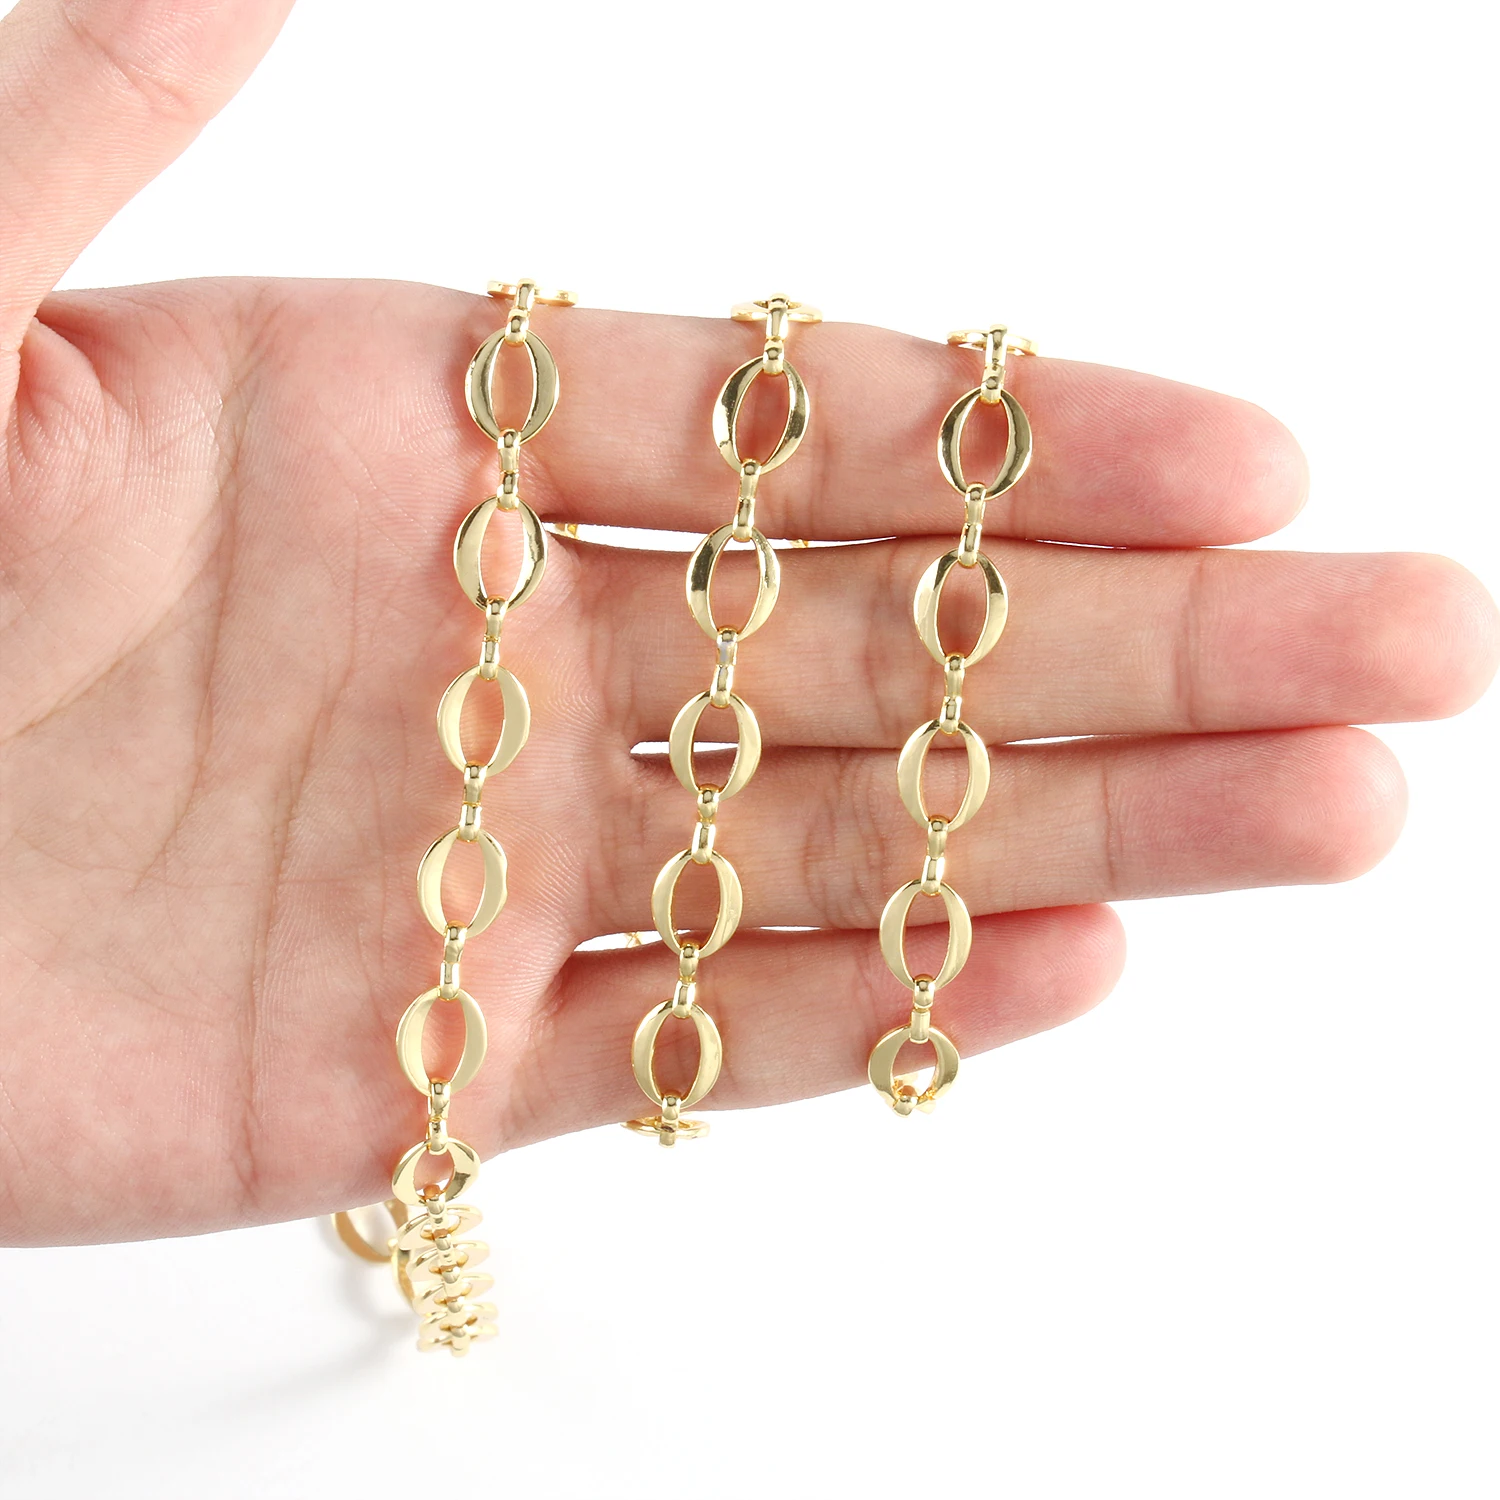 Deluxe Solid Copper Heavy Mens Chain Link Bracelet